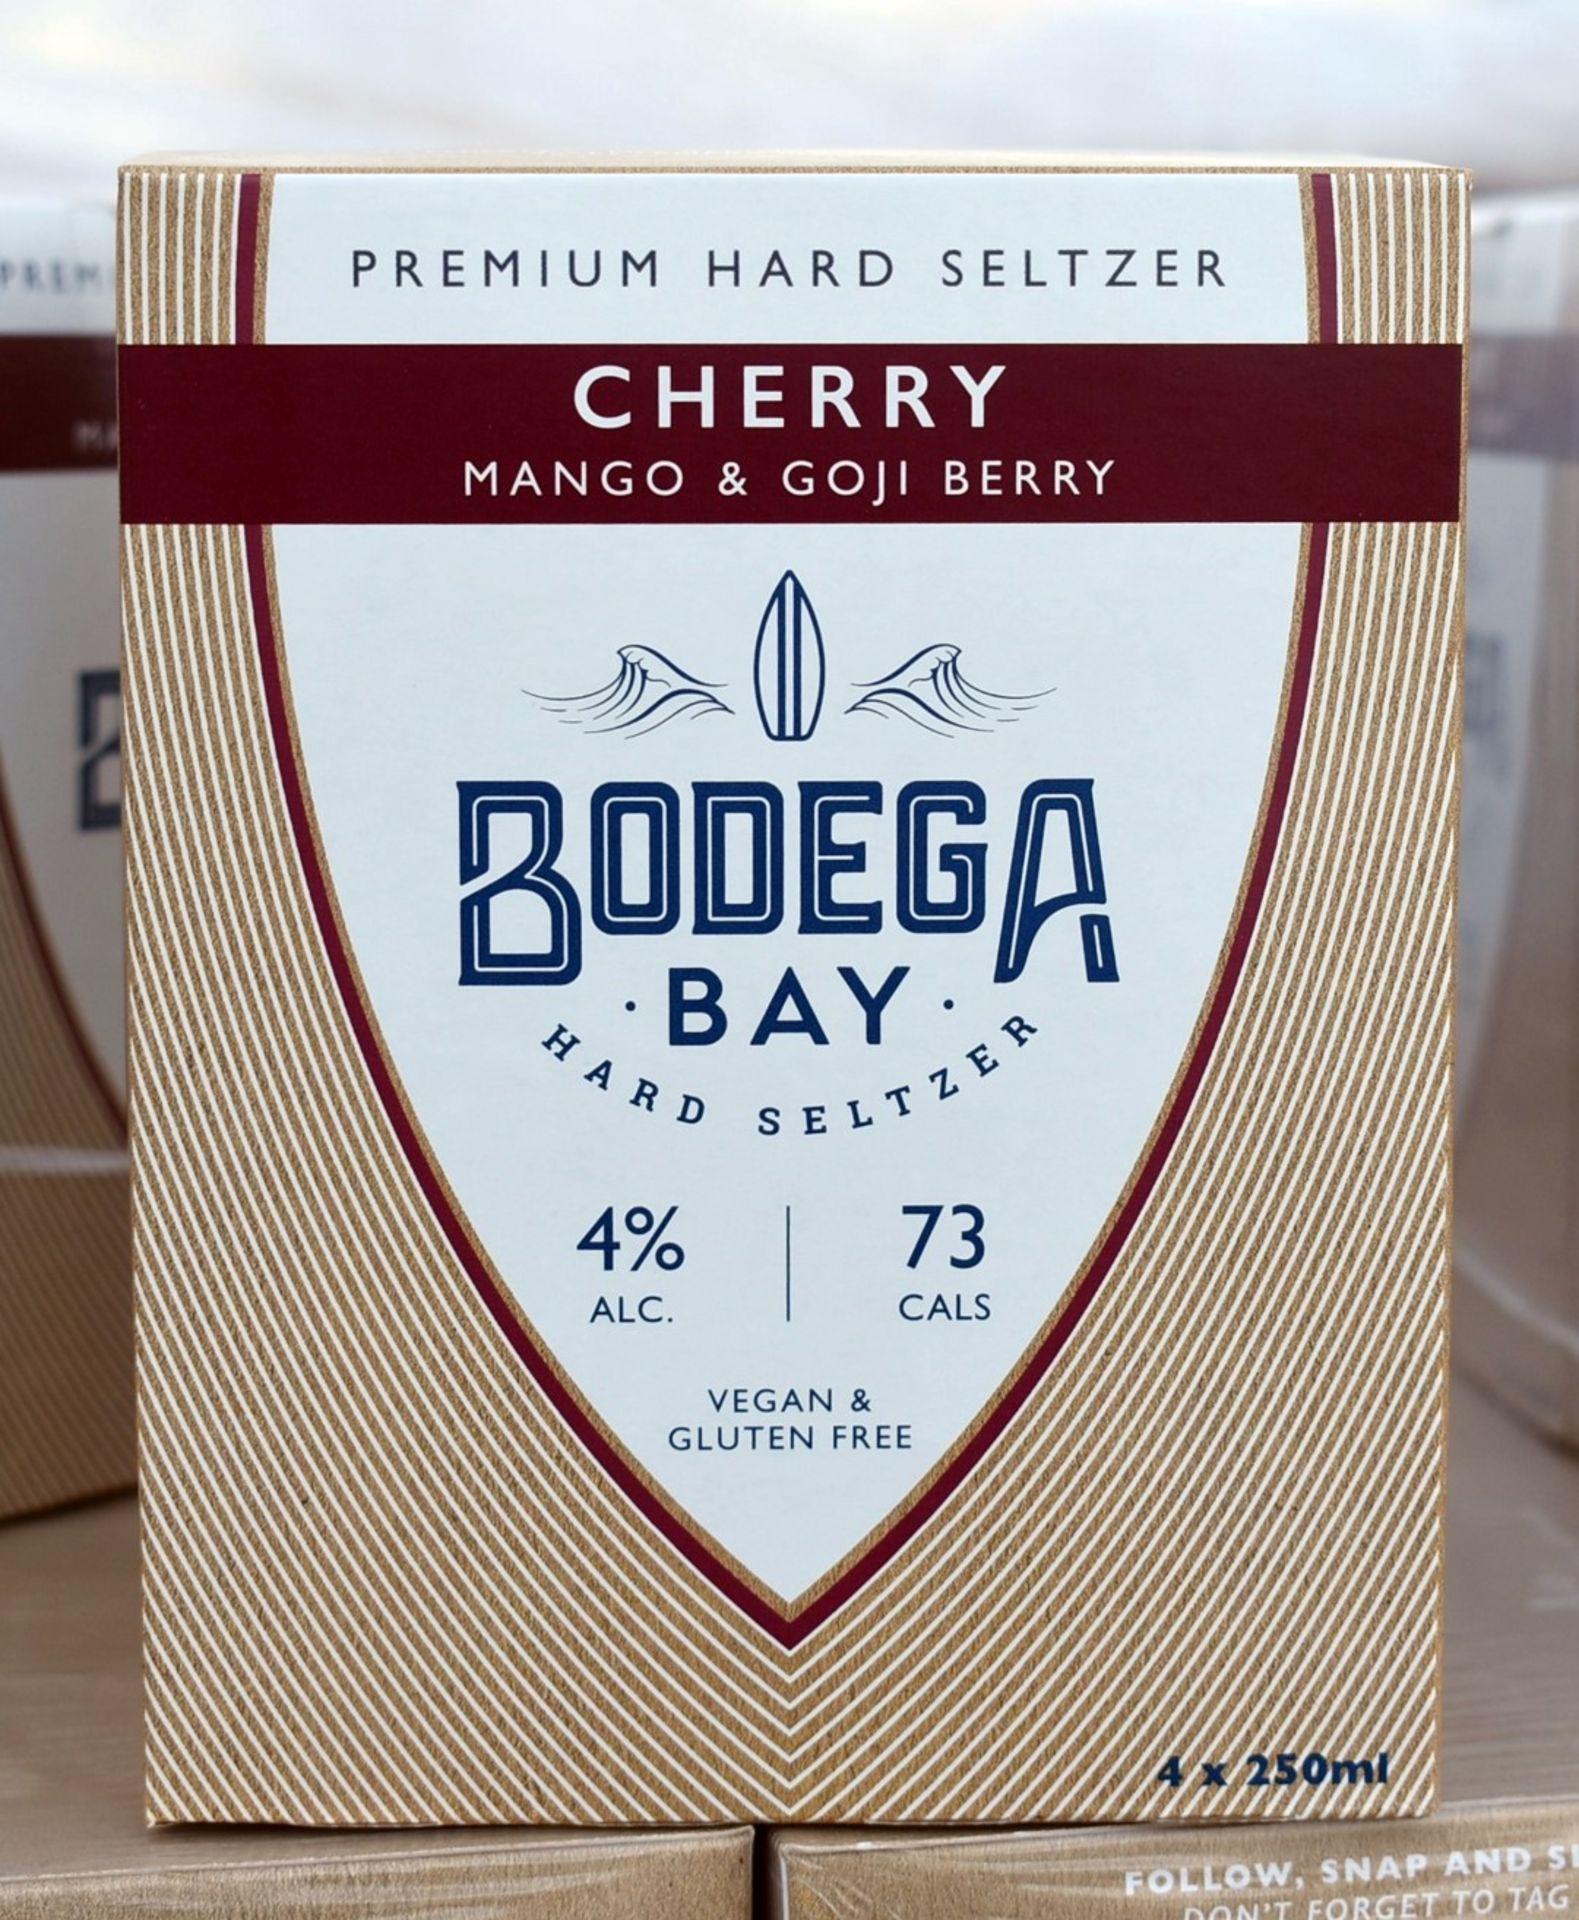 24 x Bodega Bay Hard Seltzer 250ml Alcoholic Sparkling Water Drinks - Cherry Mango & Goji Berry - 4% - Image 7 of 8